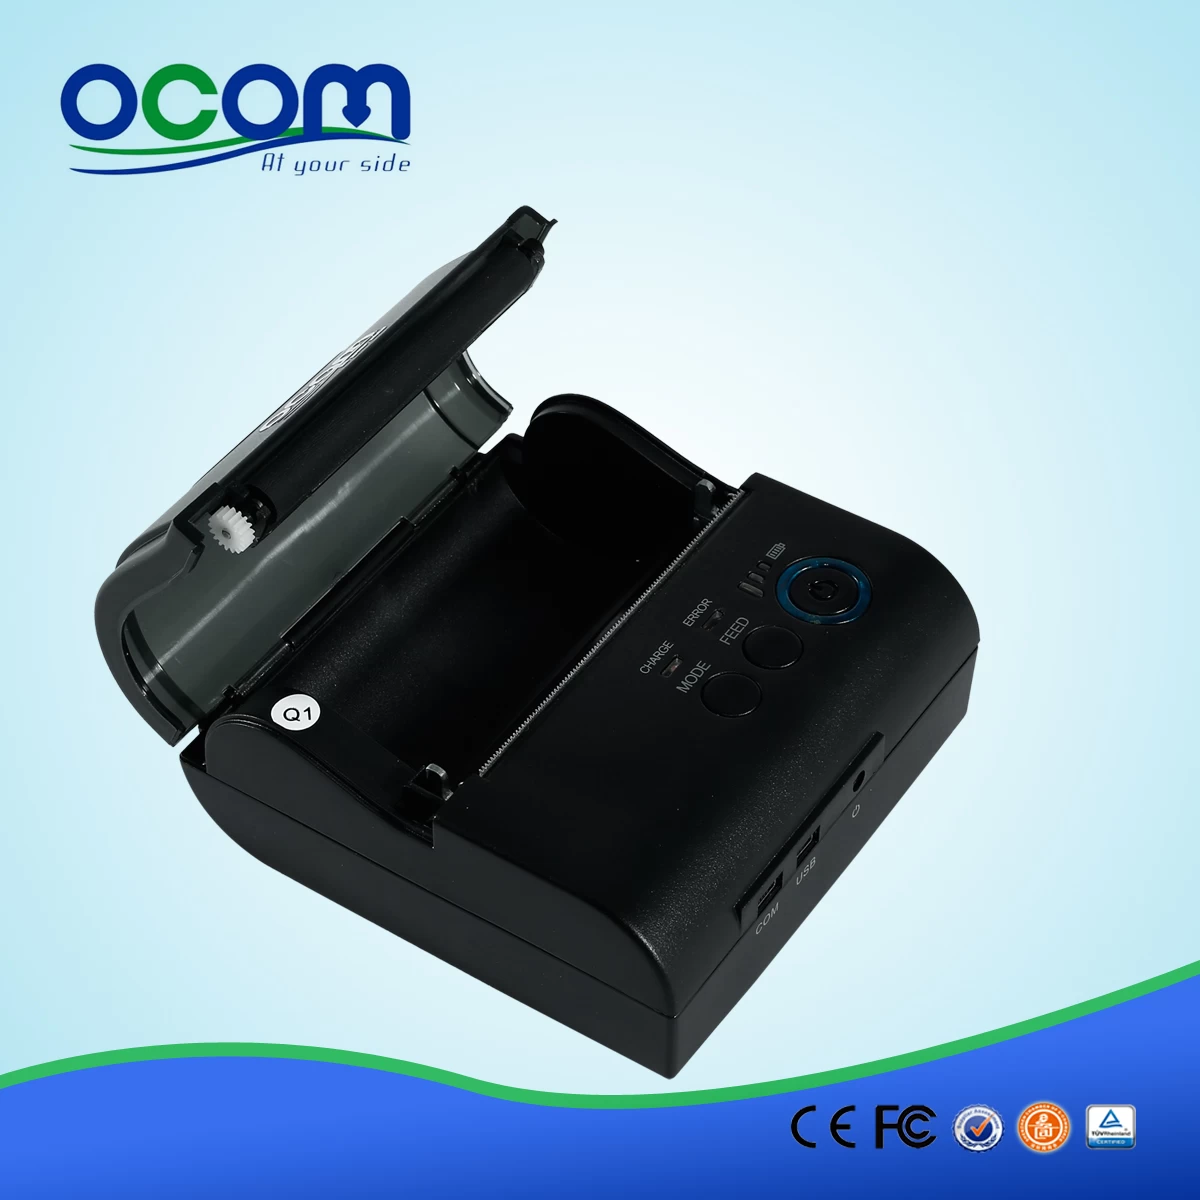 OCPP-M082: OCOM Hot selling cheap 80mm  thermal receipt printer